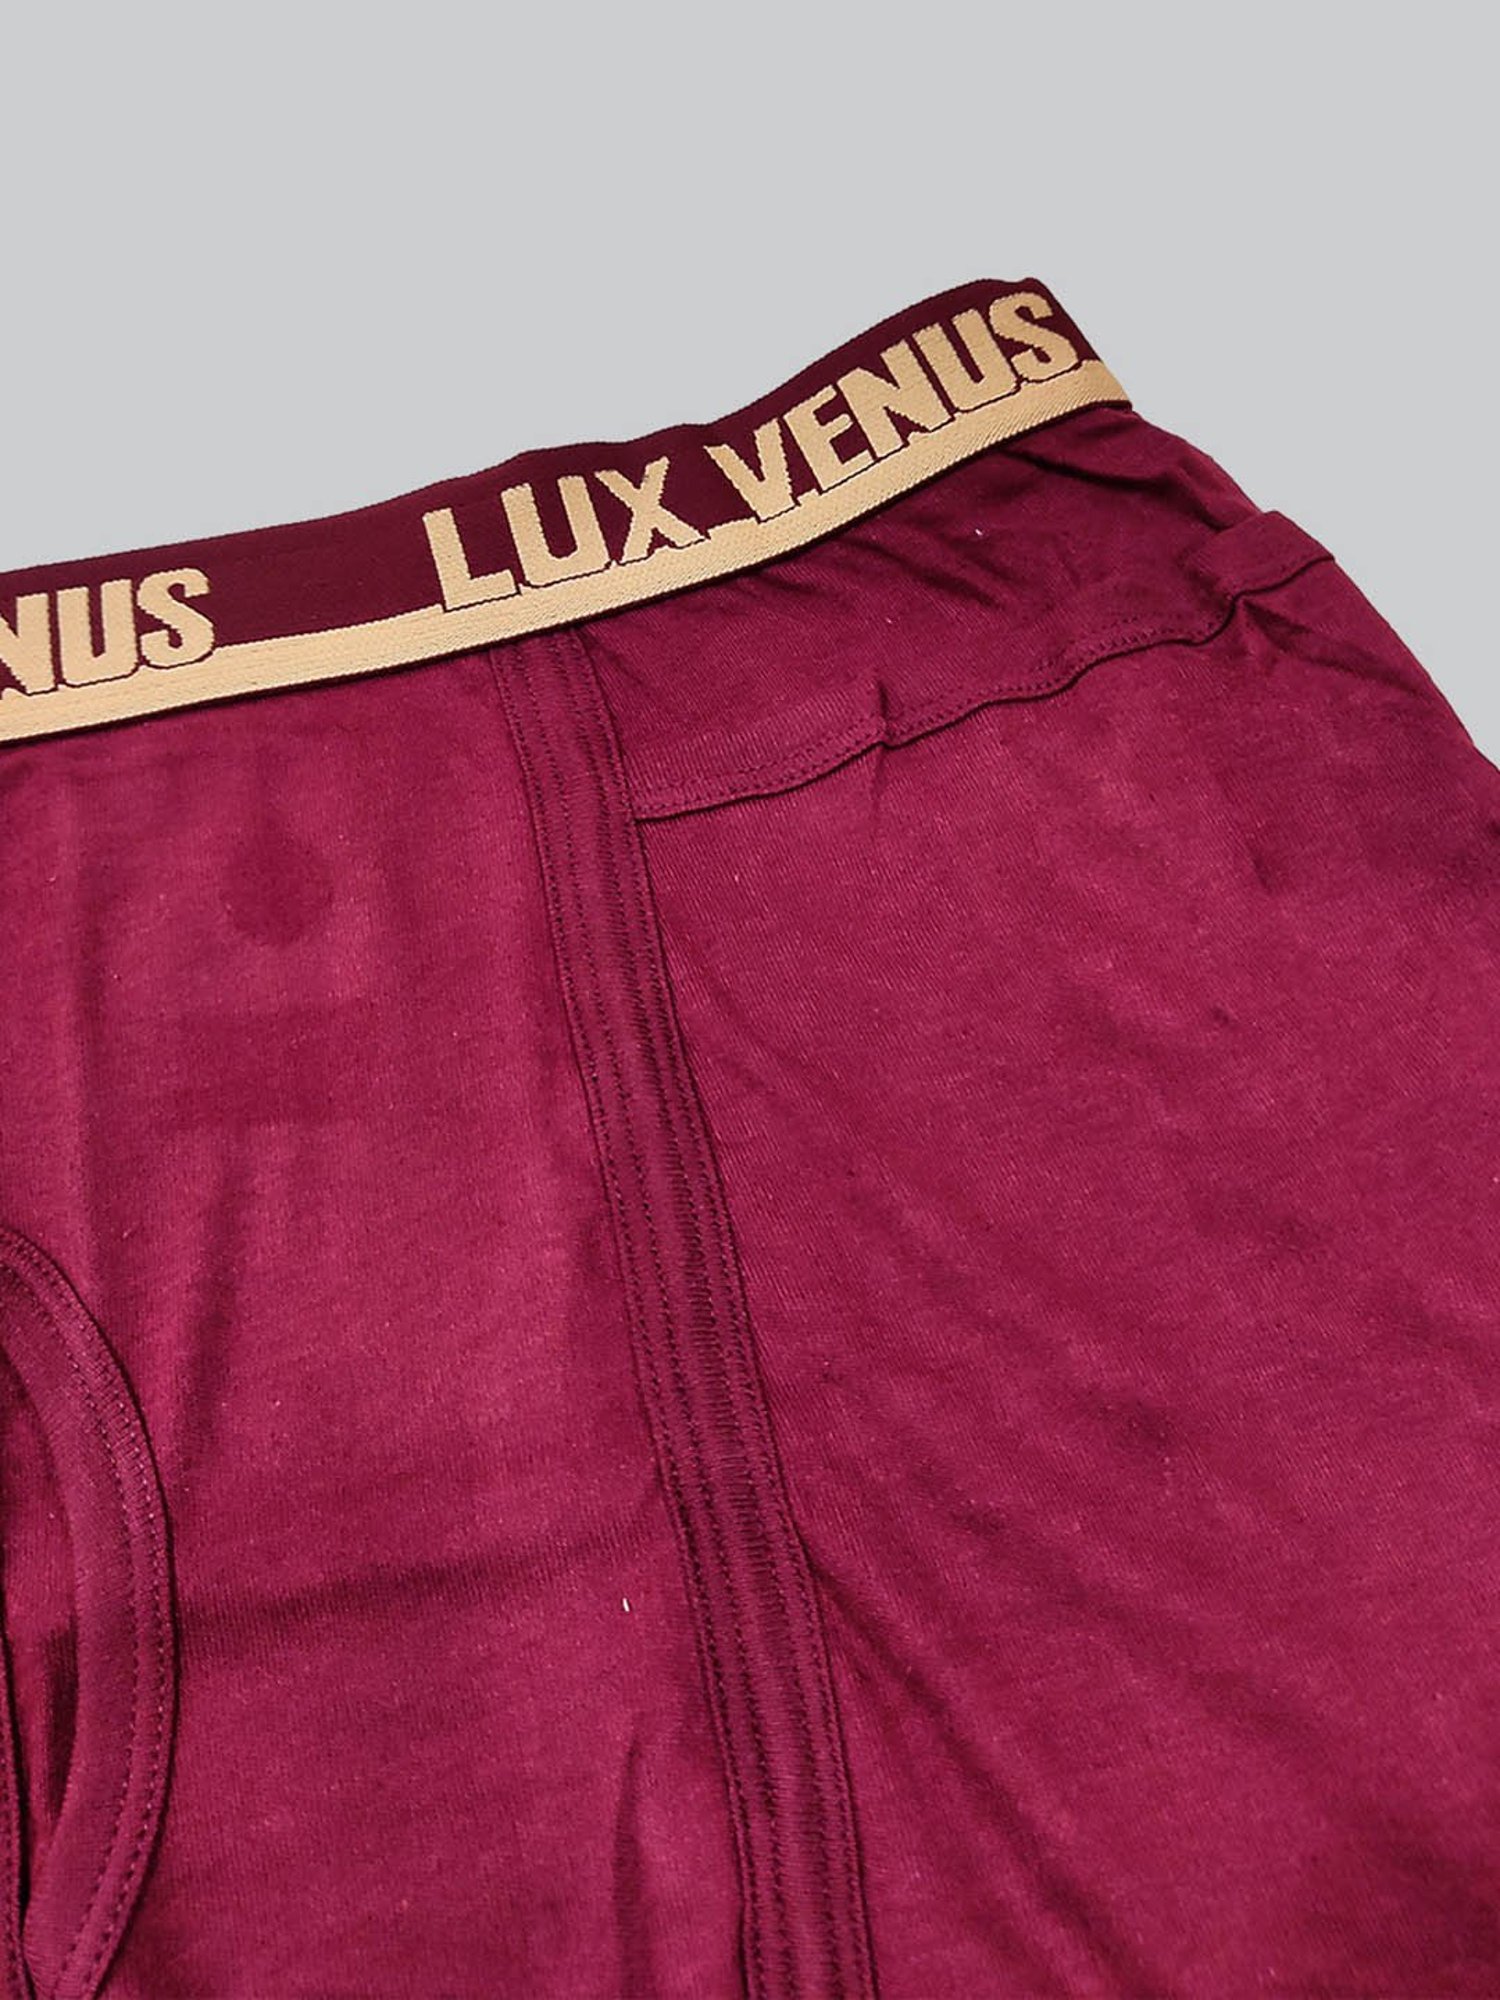 Buy LUX Venus Assorted Cotton Pocket Trunks - Pack of 2 for Men's